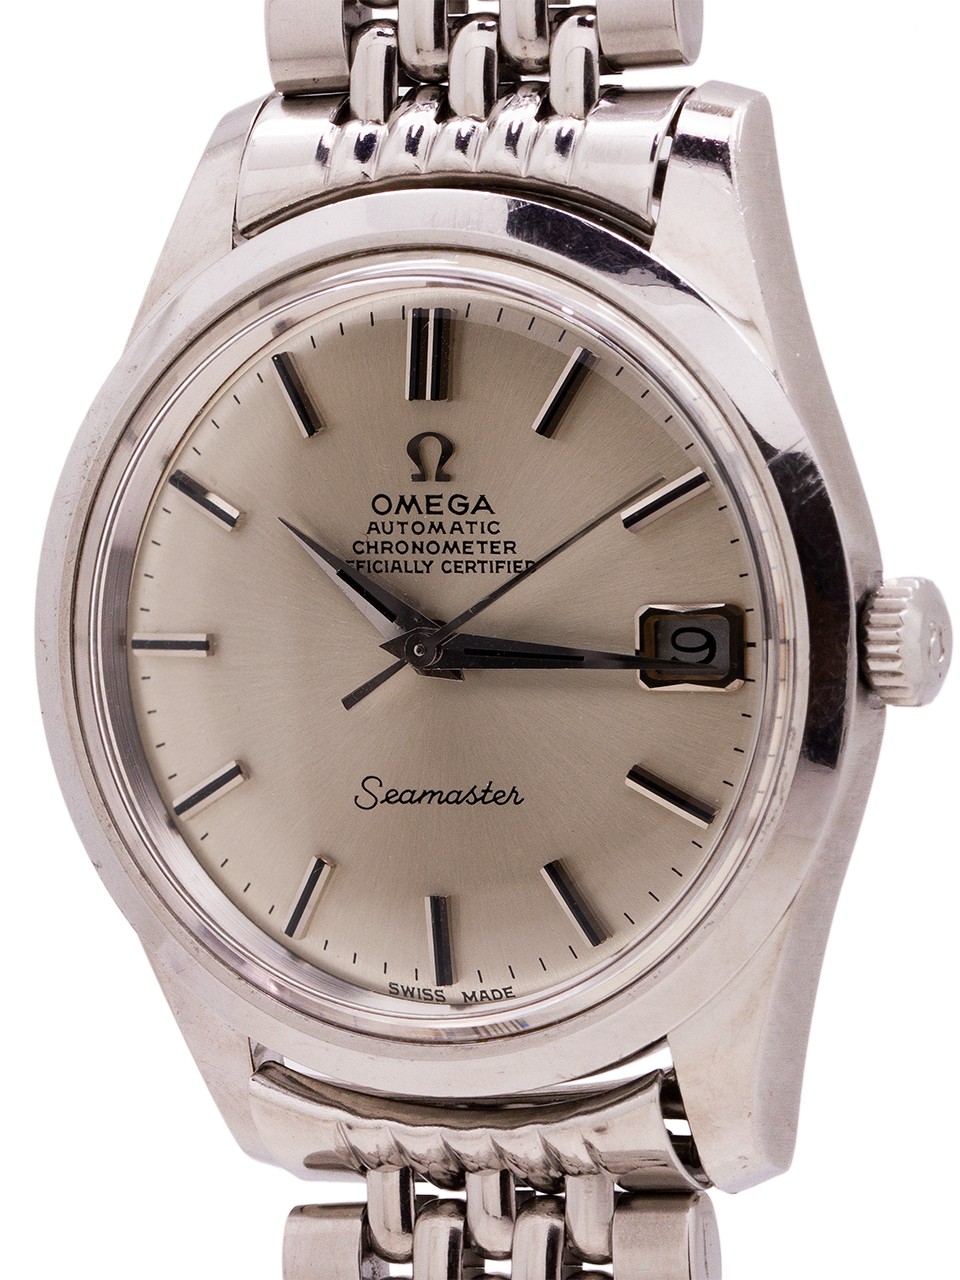 Omega Seamaster Chronometer ref 168.024 